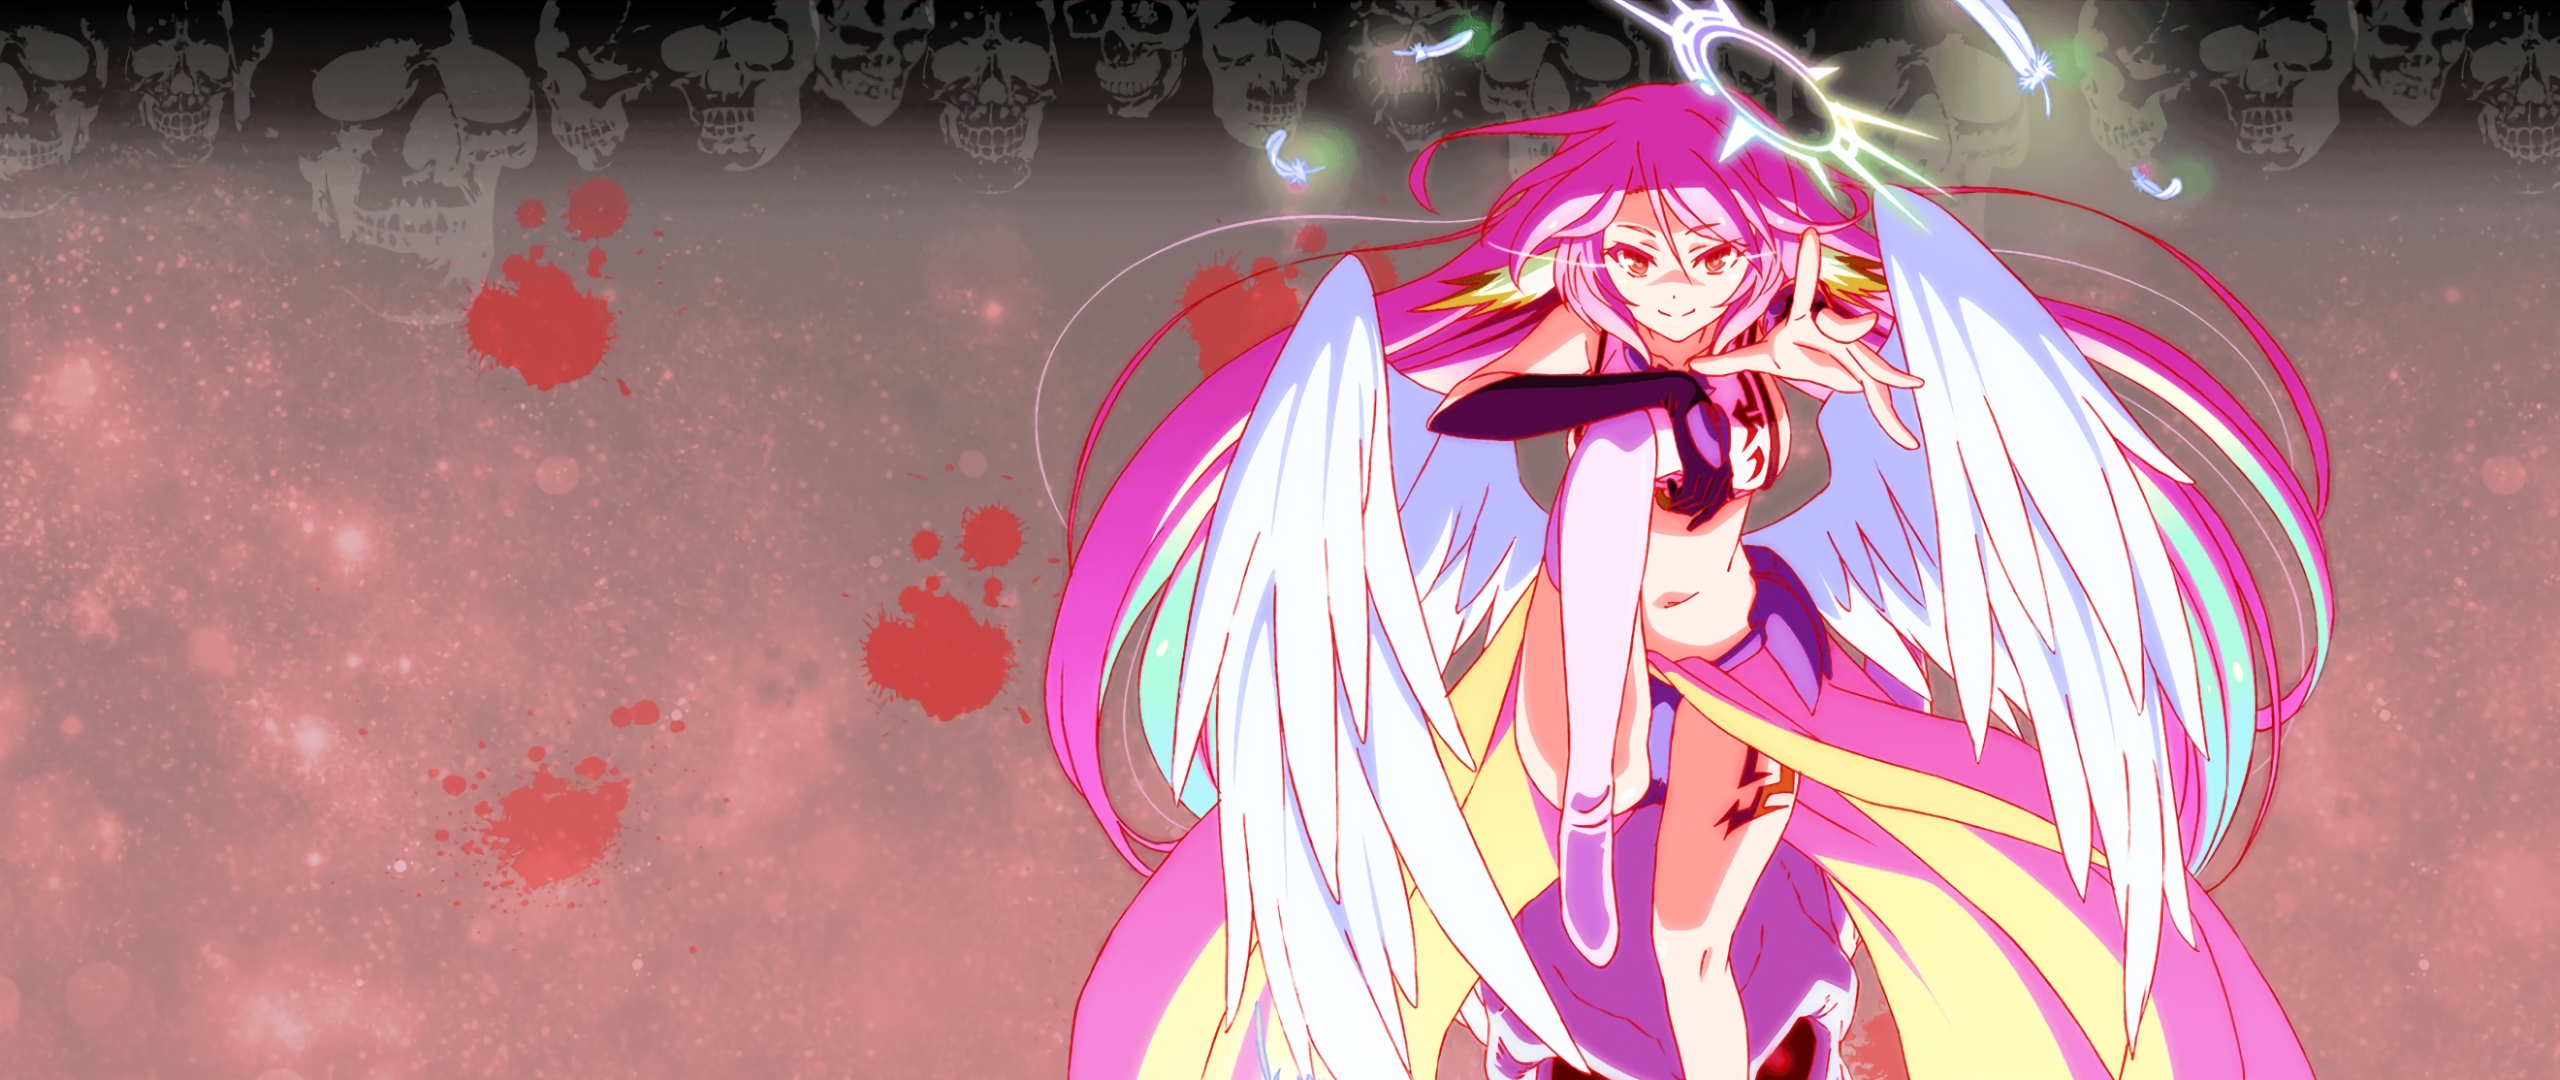 Anime 2560x1080 Jibril No Game No Life anime girls wings pink hair anime fantasy art fantasy girl long hair blood